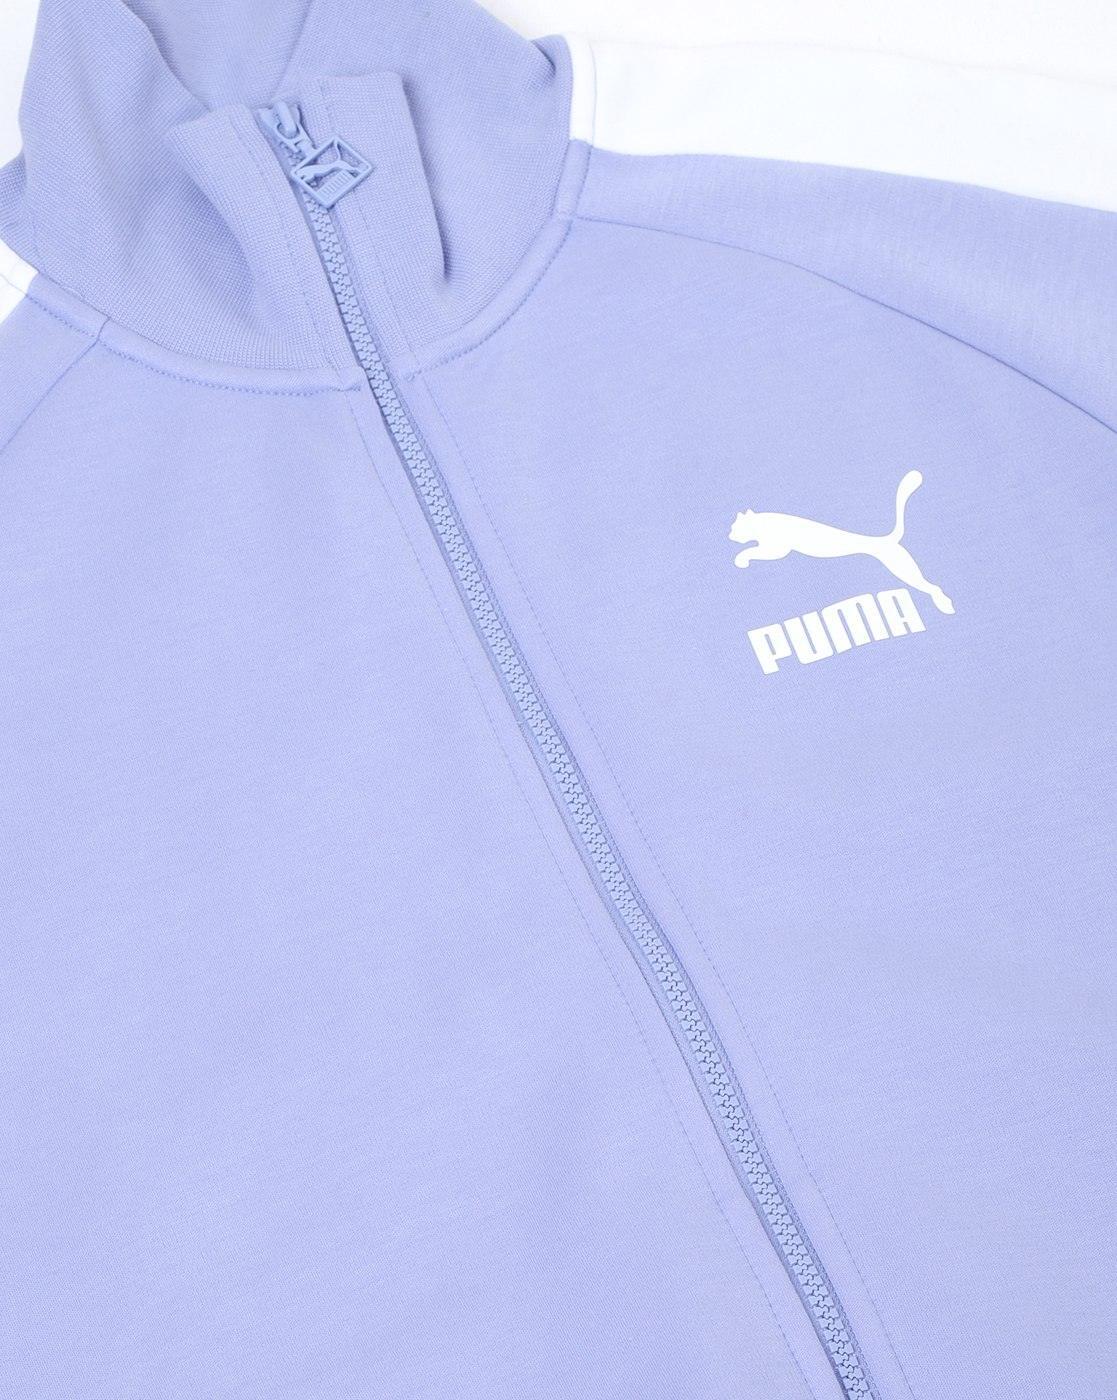 & for Jackets Puma Online Coats Pop Men Buy Lavender by